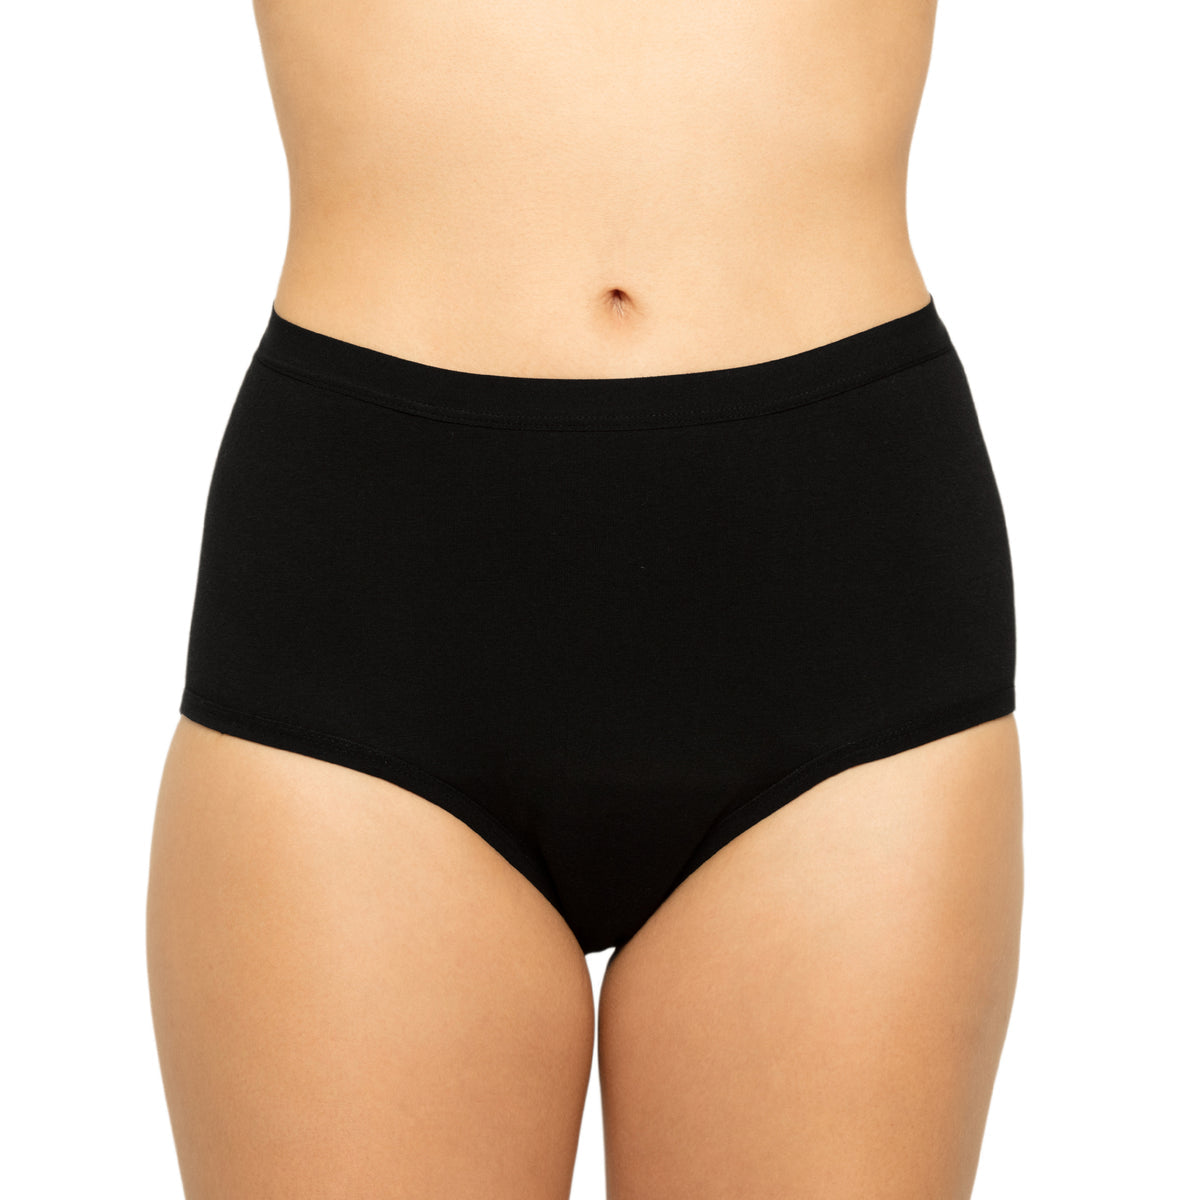 Cunhuan Thongs for Women Underwear Pocket For Menstruation Warm